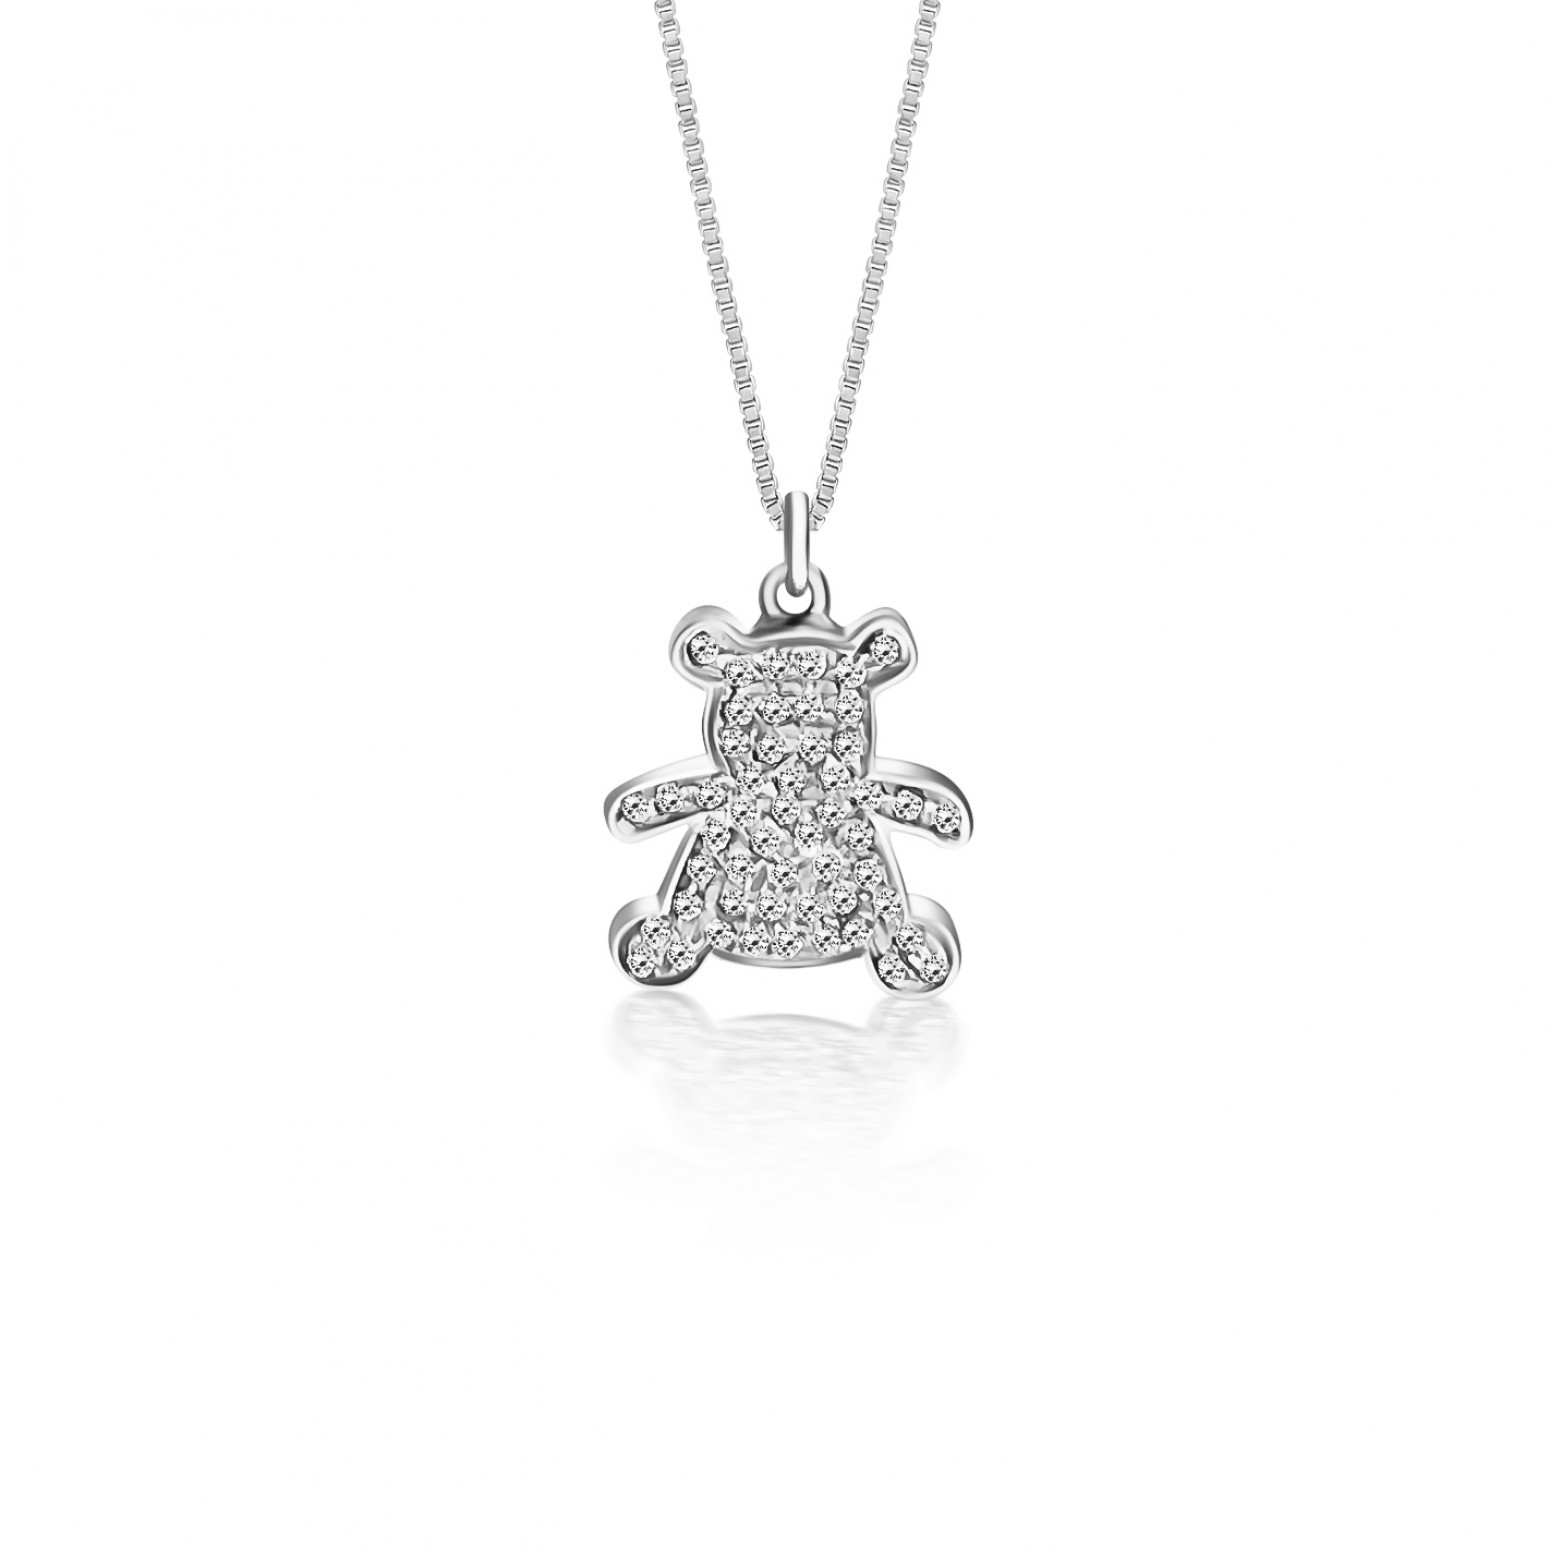 Teddy bear necklace, Κ14 white gold with zircon, ko1749 NECKLACES Κοσμηματα - chrilia.gr